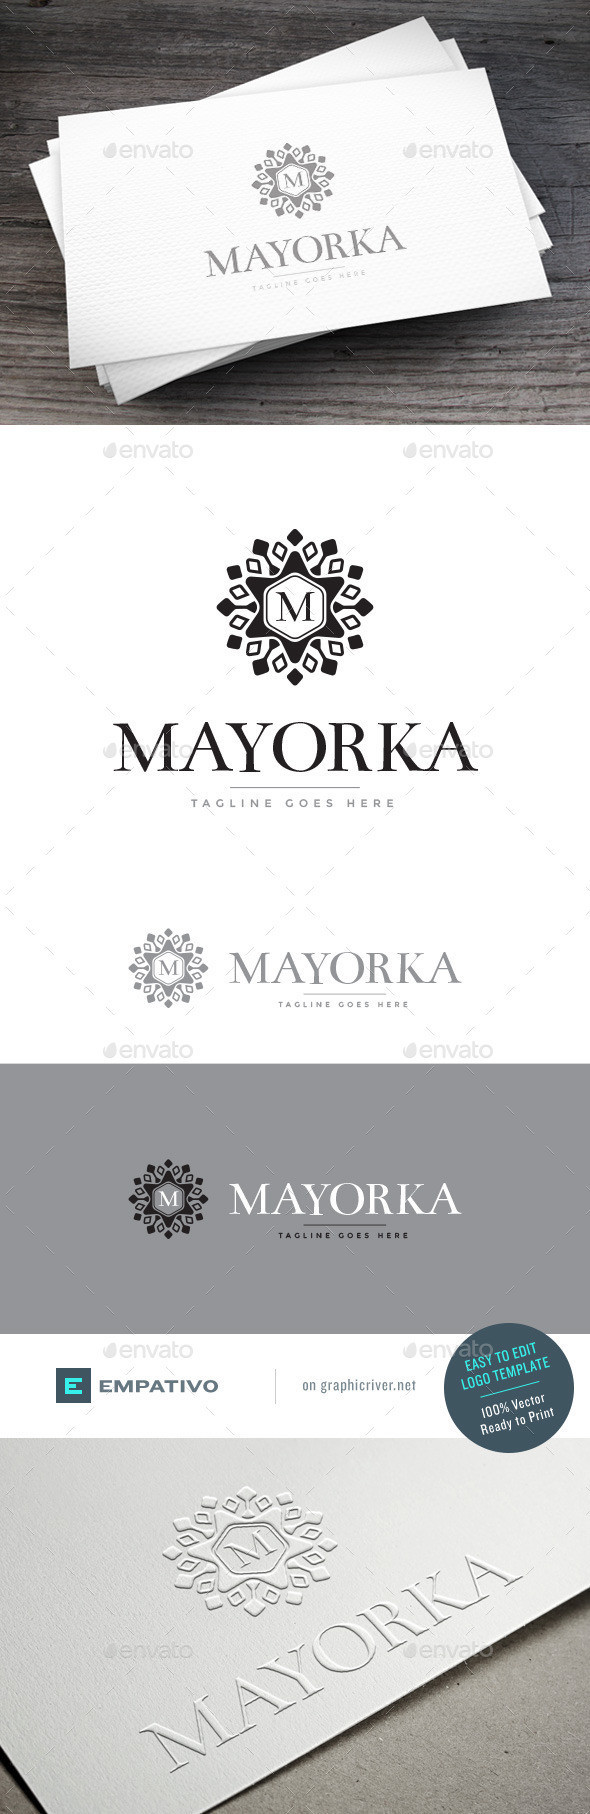 Mayorka logo template